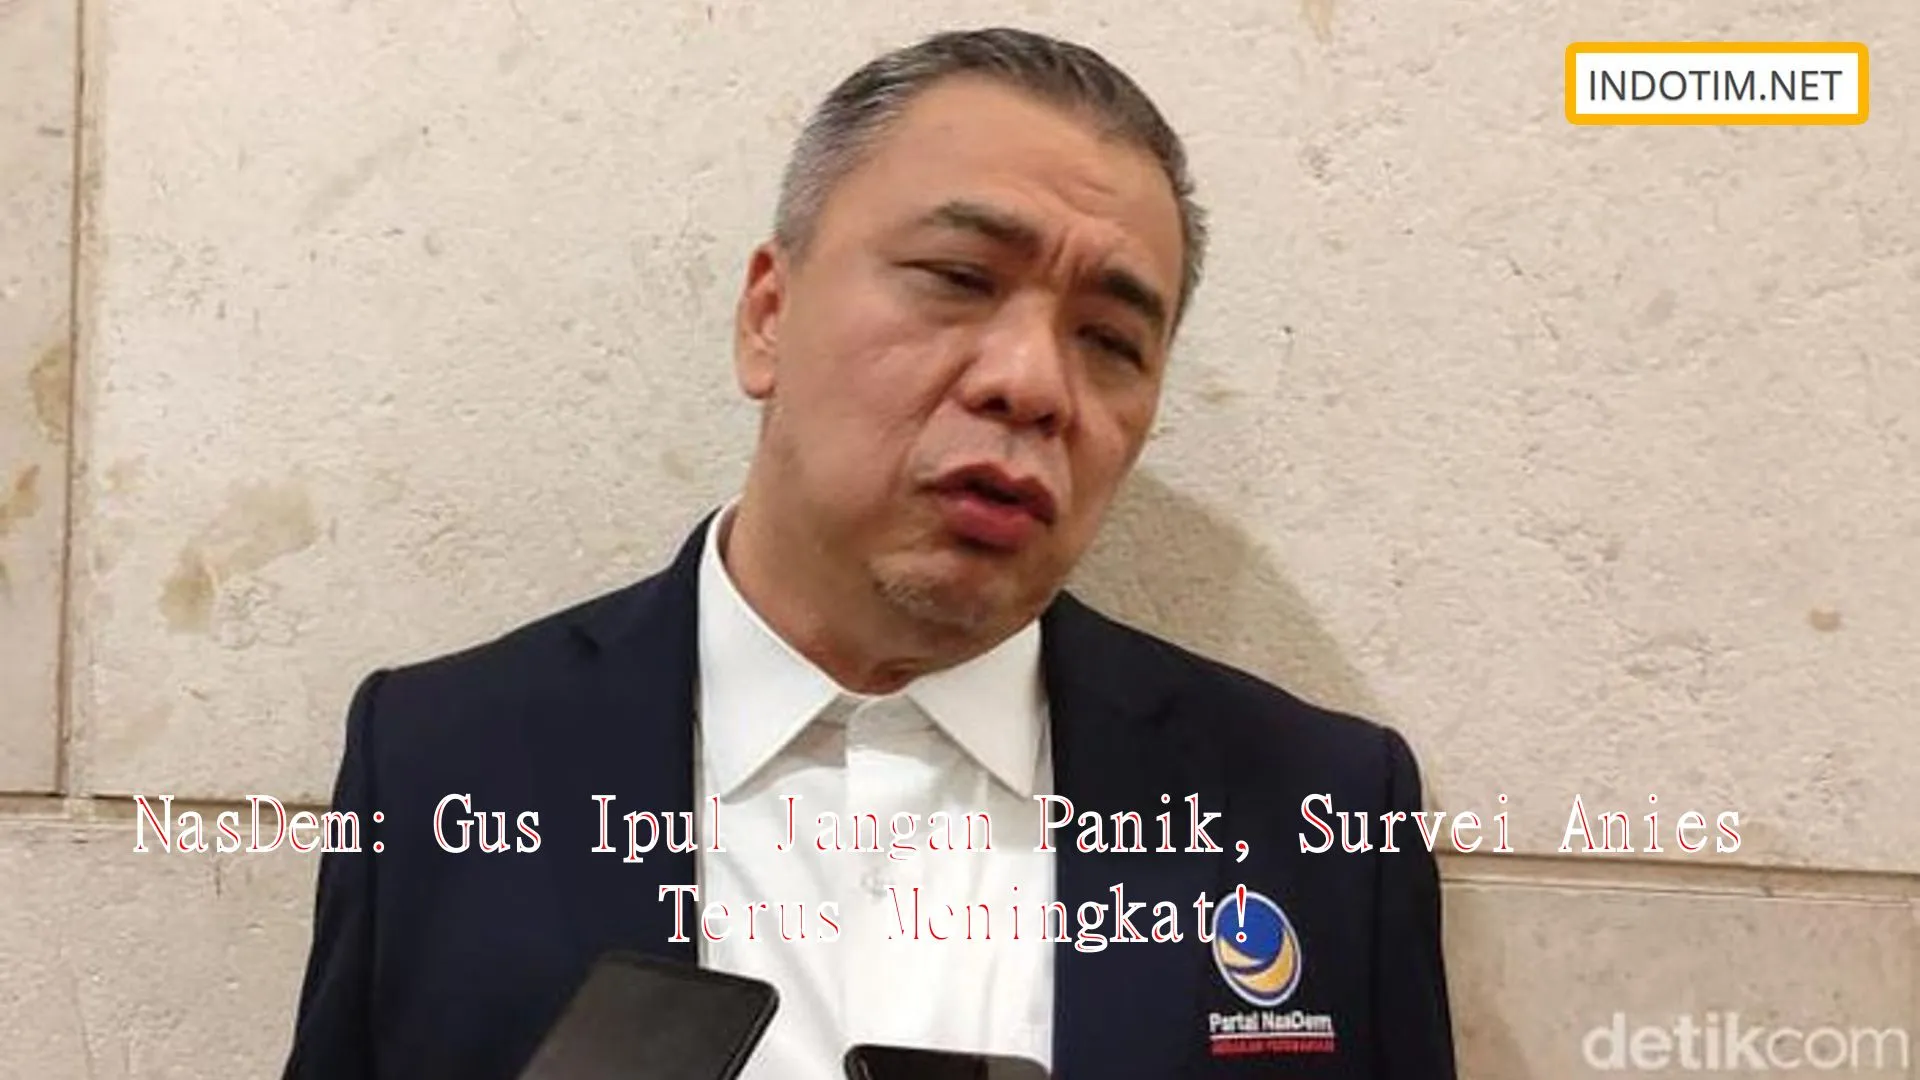 NasDem: Gus Ipul Jangan Panik, Survei Anies Terus Meningkat!